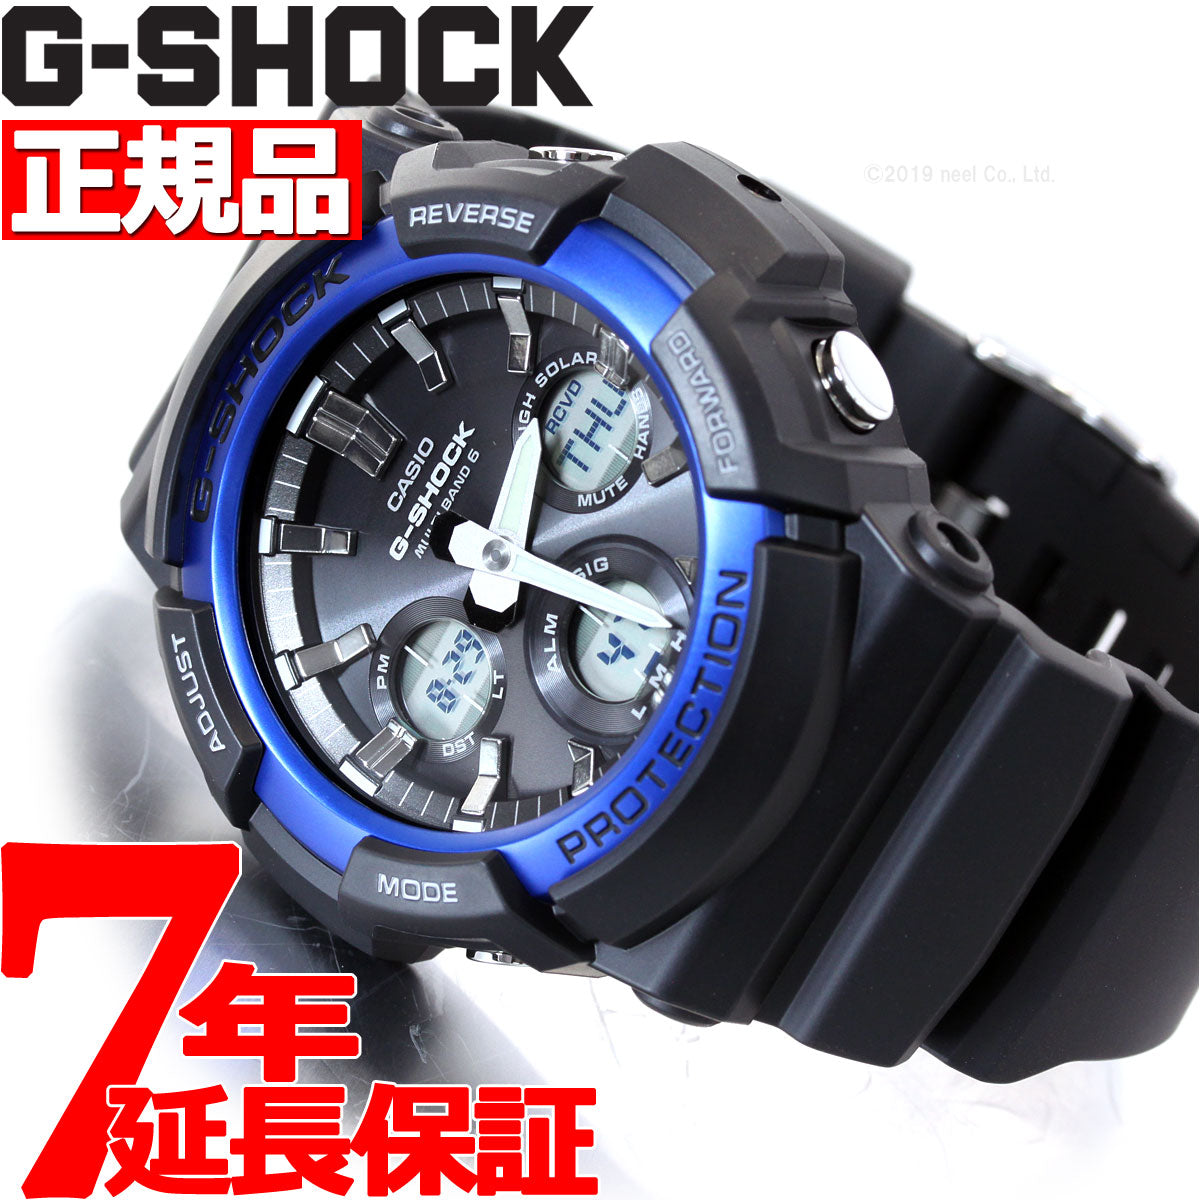 G-SHOCK 電波 ソーラー 腕時計 メンズ タフソーラー GAW-100B-1A2JF